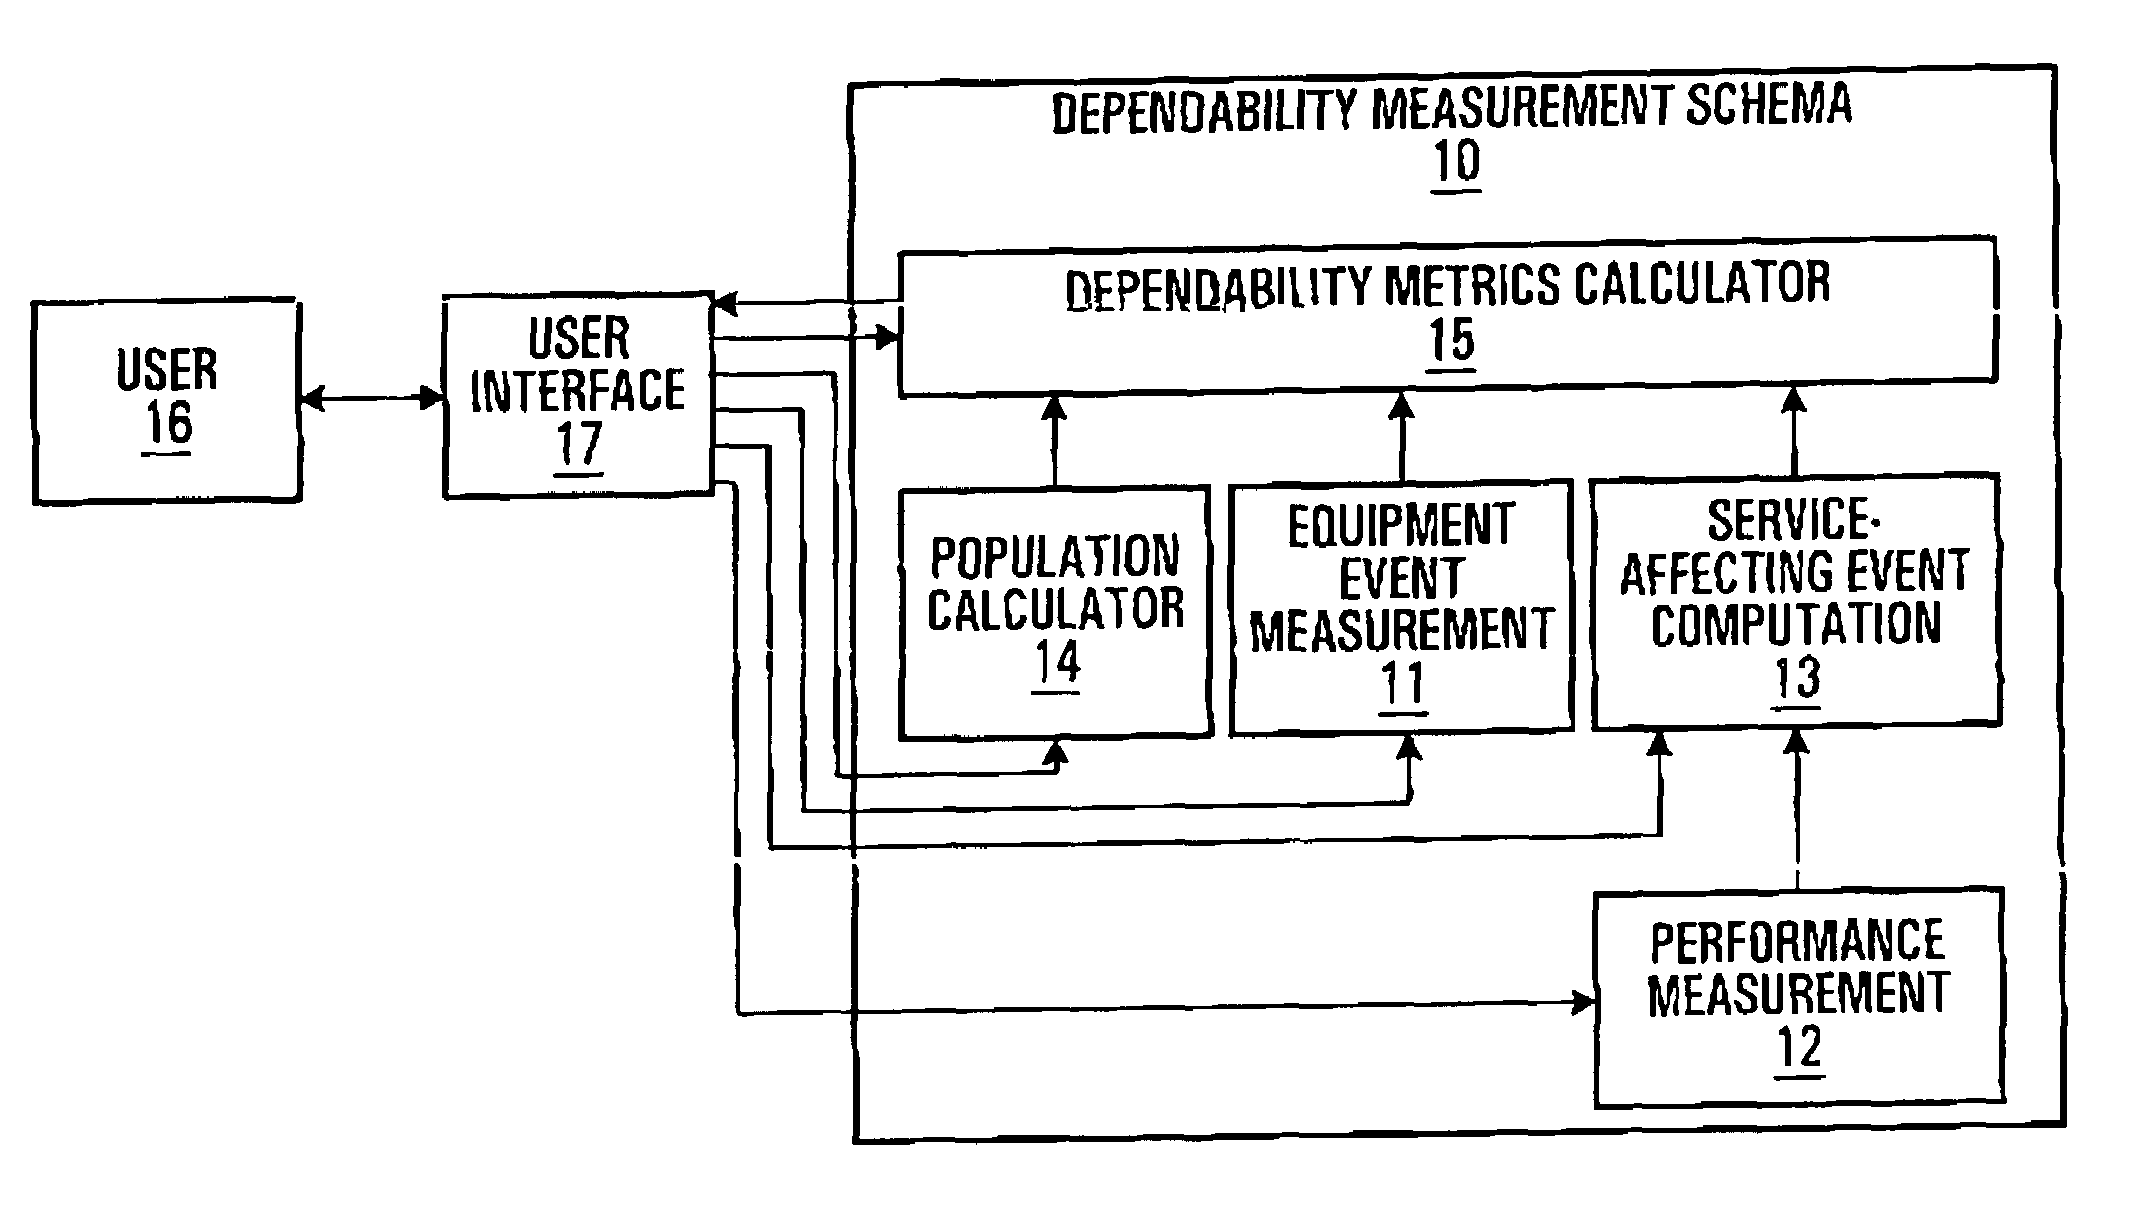 Dependability measurement schema for communication networks